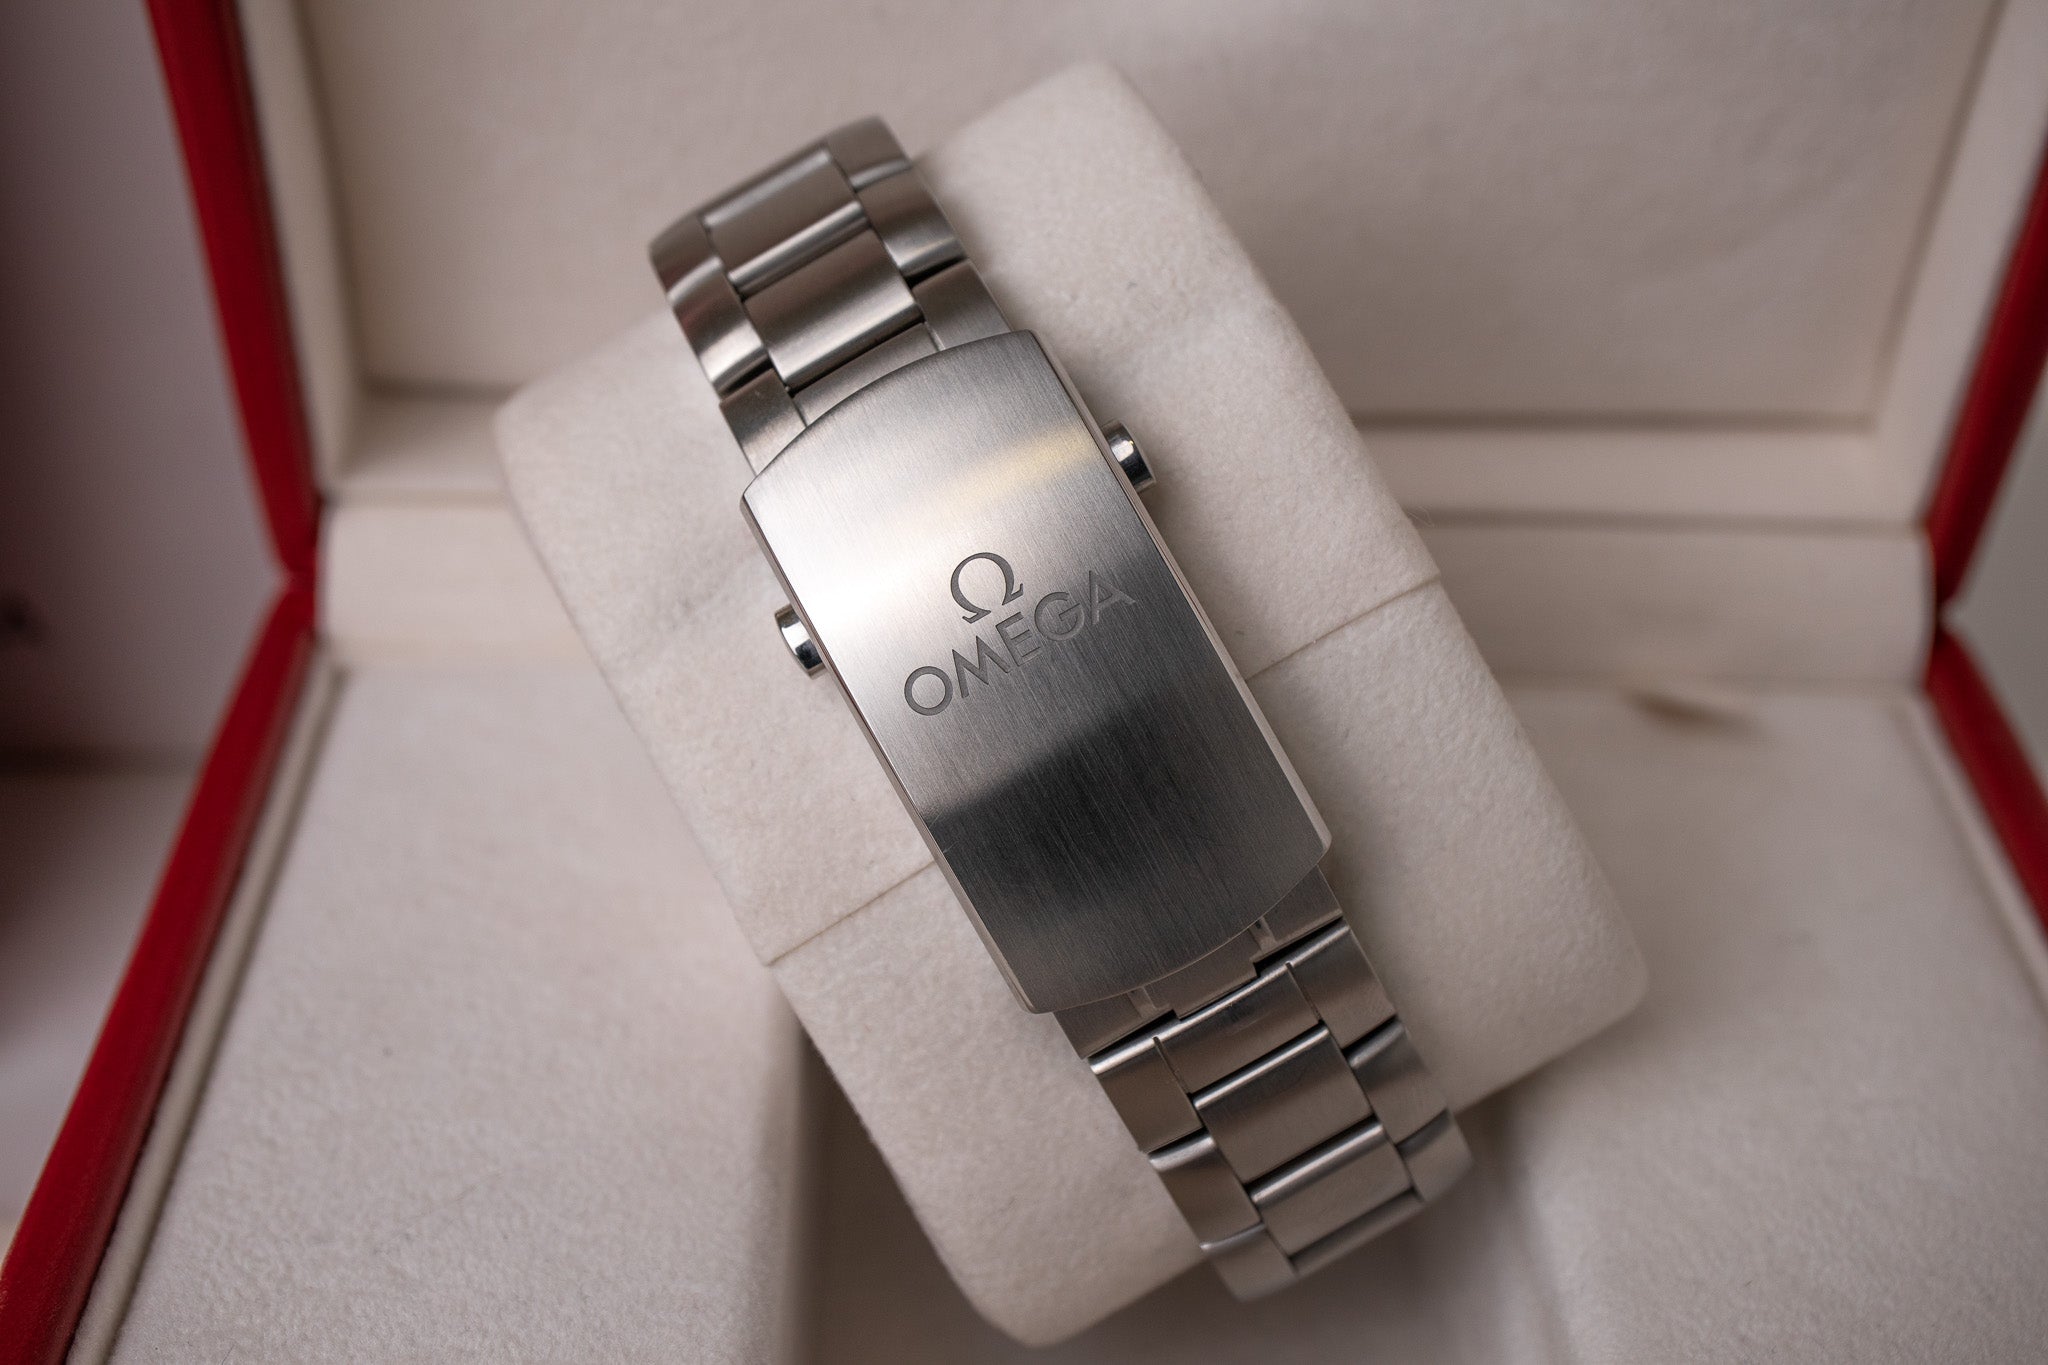 New Chronoscope adjustable clasp: will Omega upgrade the Speedy? - Rolex  Forums - Rolex Watch Forum